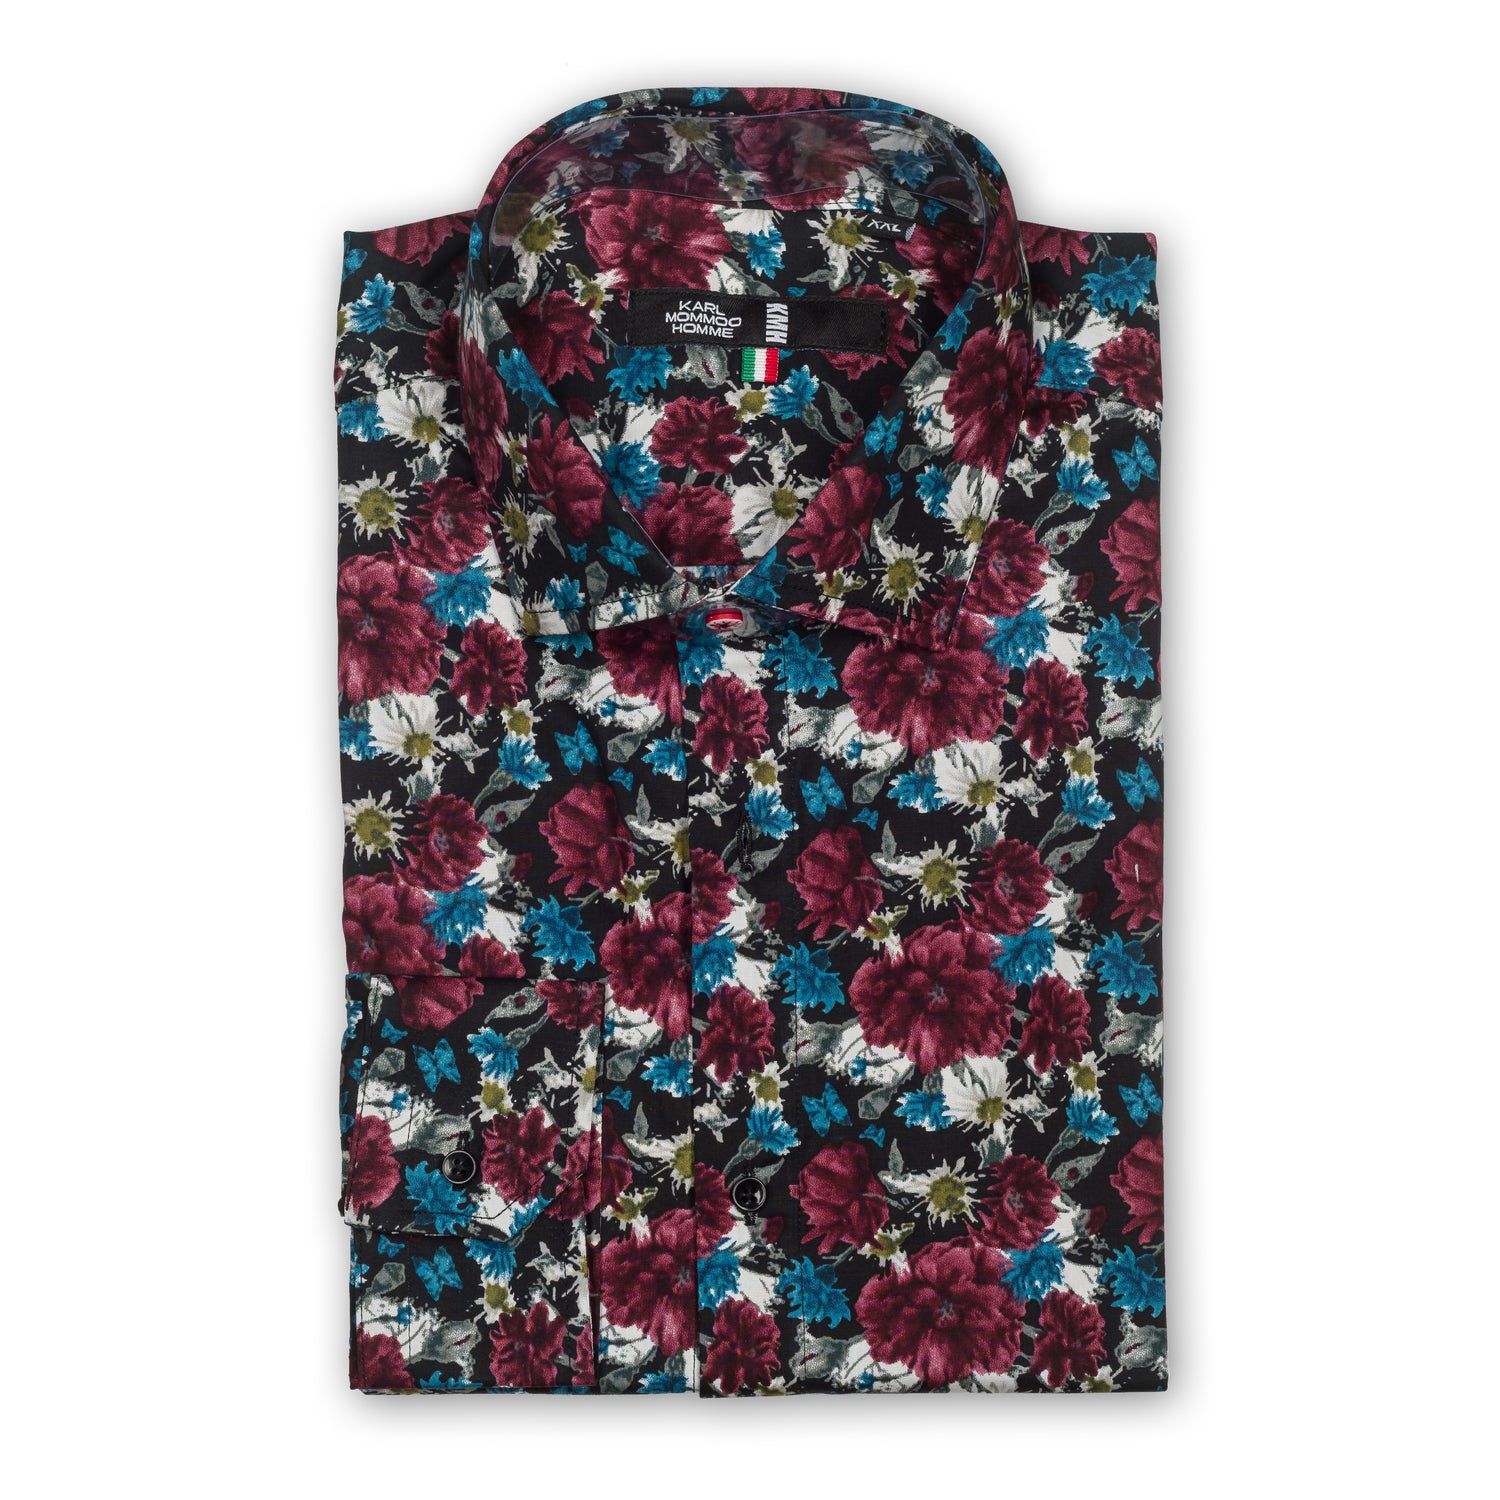 Karl Mommoo - Italienisches Herren-Hemd in floralem Print in blau/bordeaux, Baumwolle mit Elasthan, Modern Fit. 